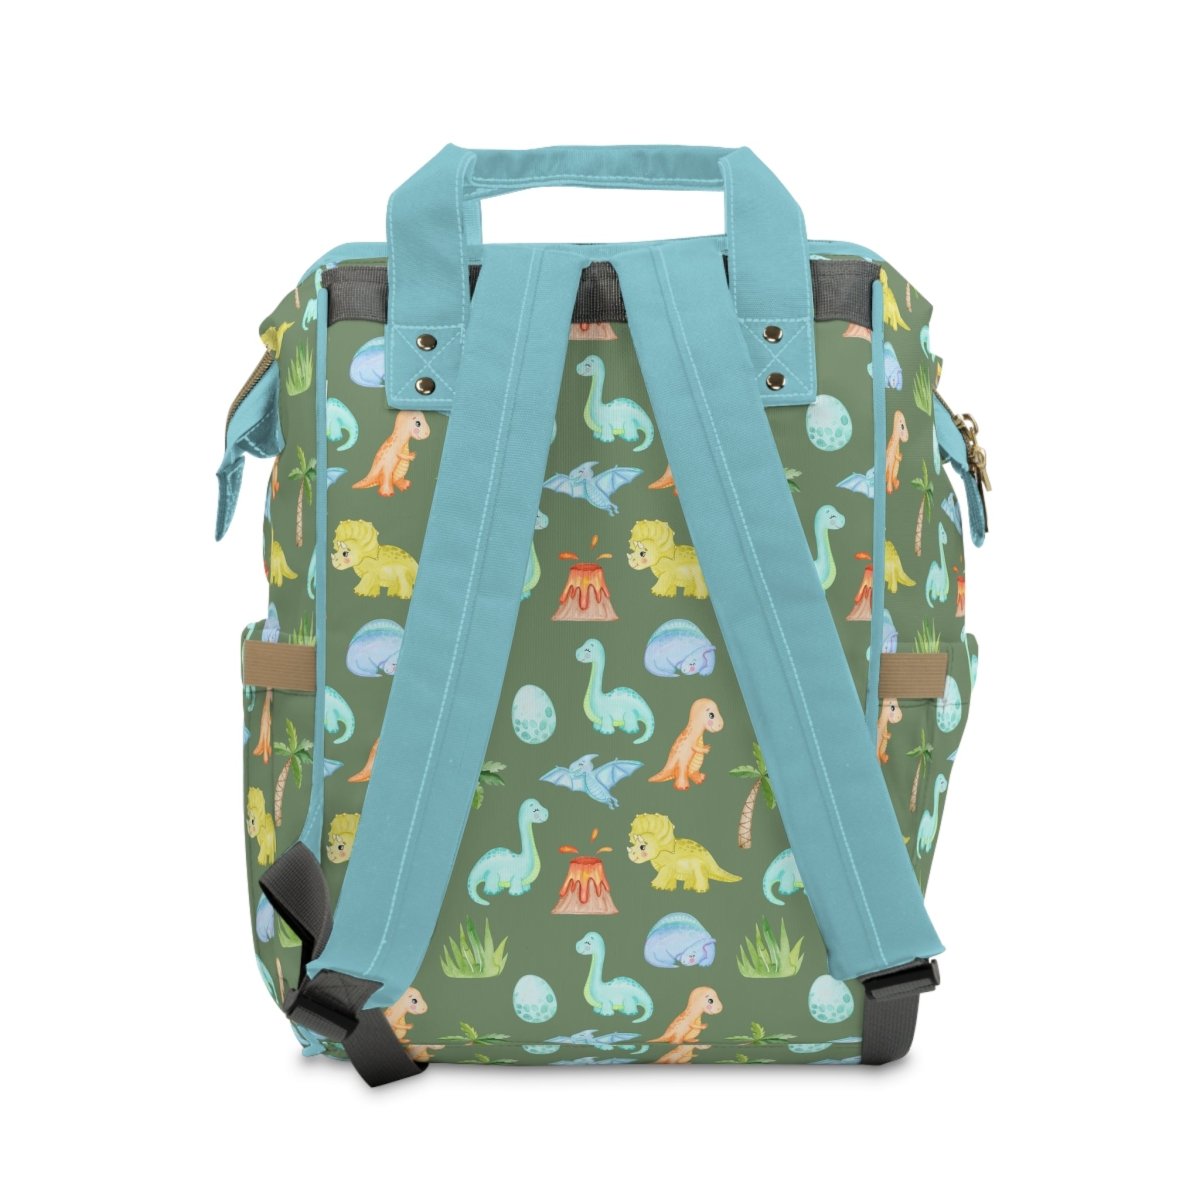 Dino Boy Personalized Backpack Diaper Bag - Dino Boy, gender_boy, text